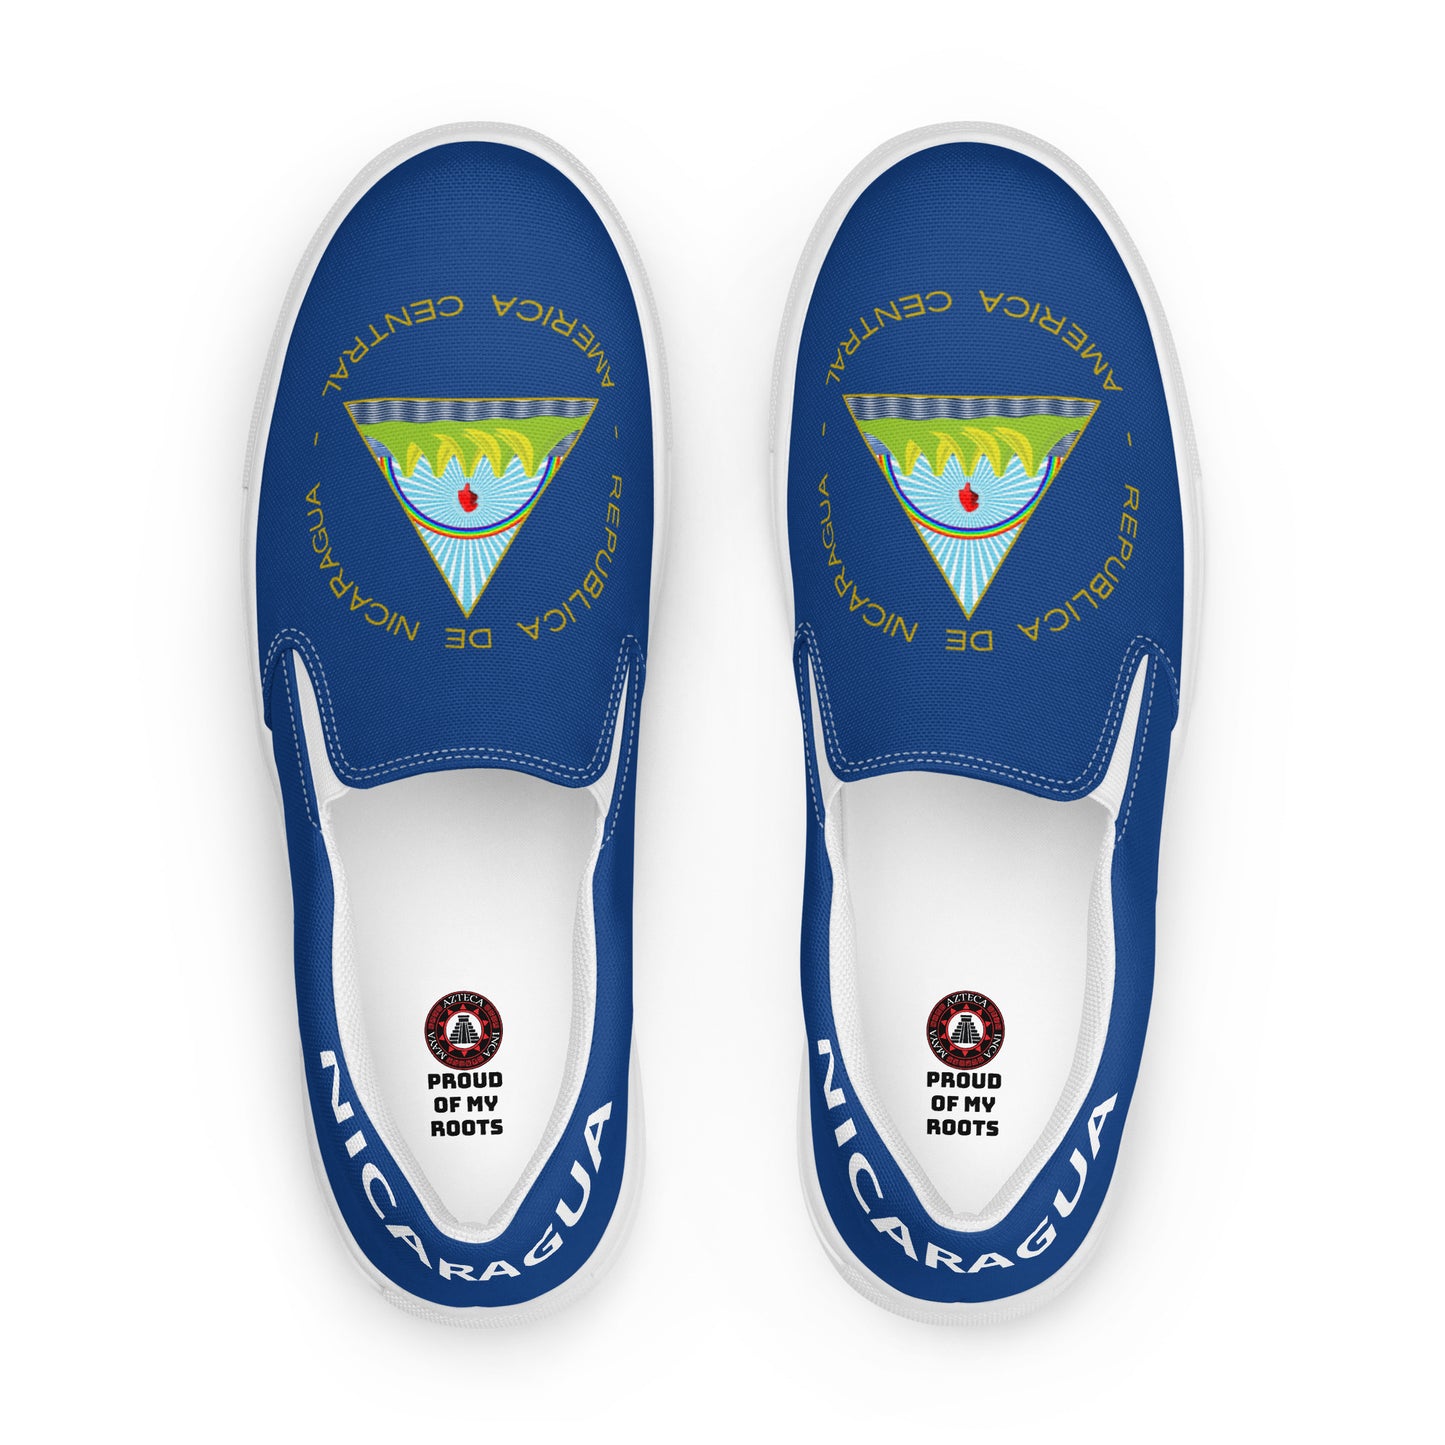 Nicaragua - Women - Blue - Slip-on shoes